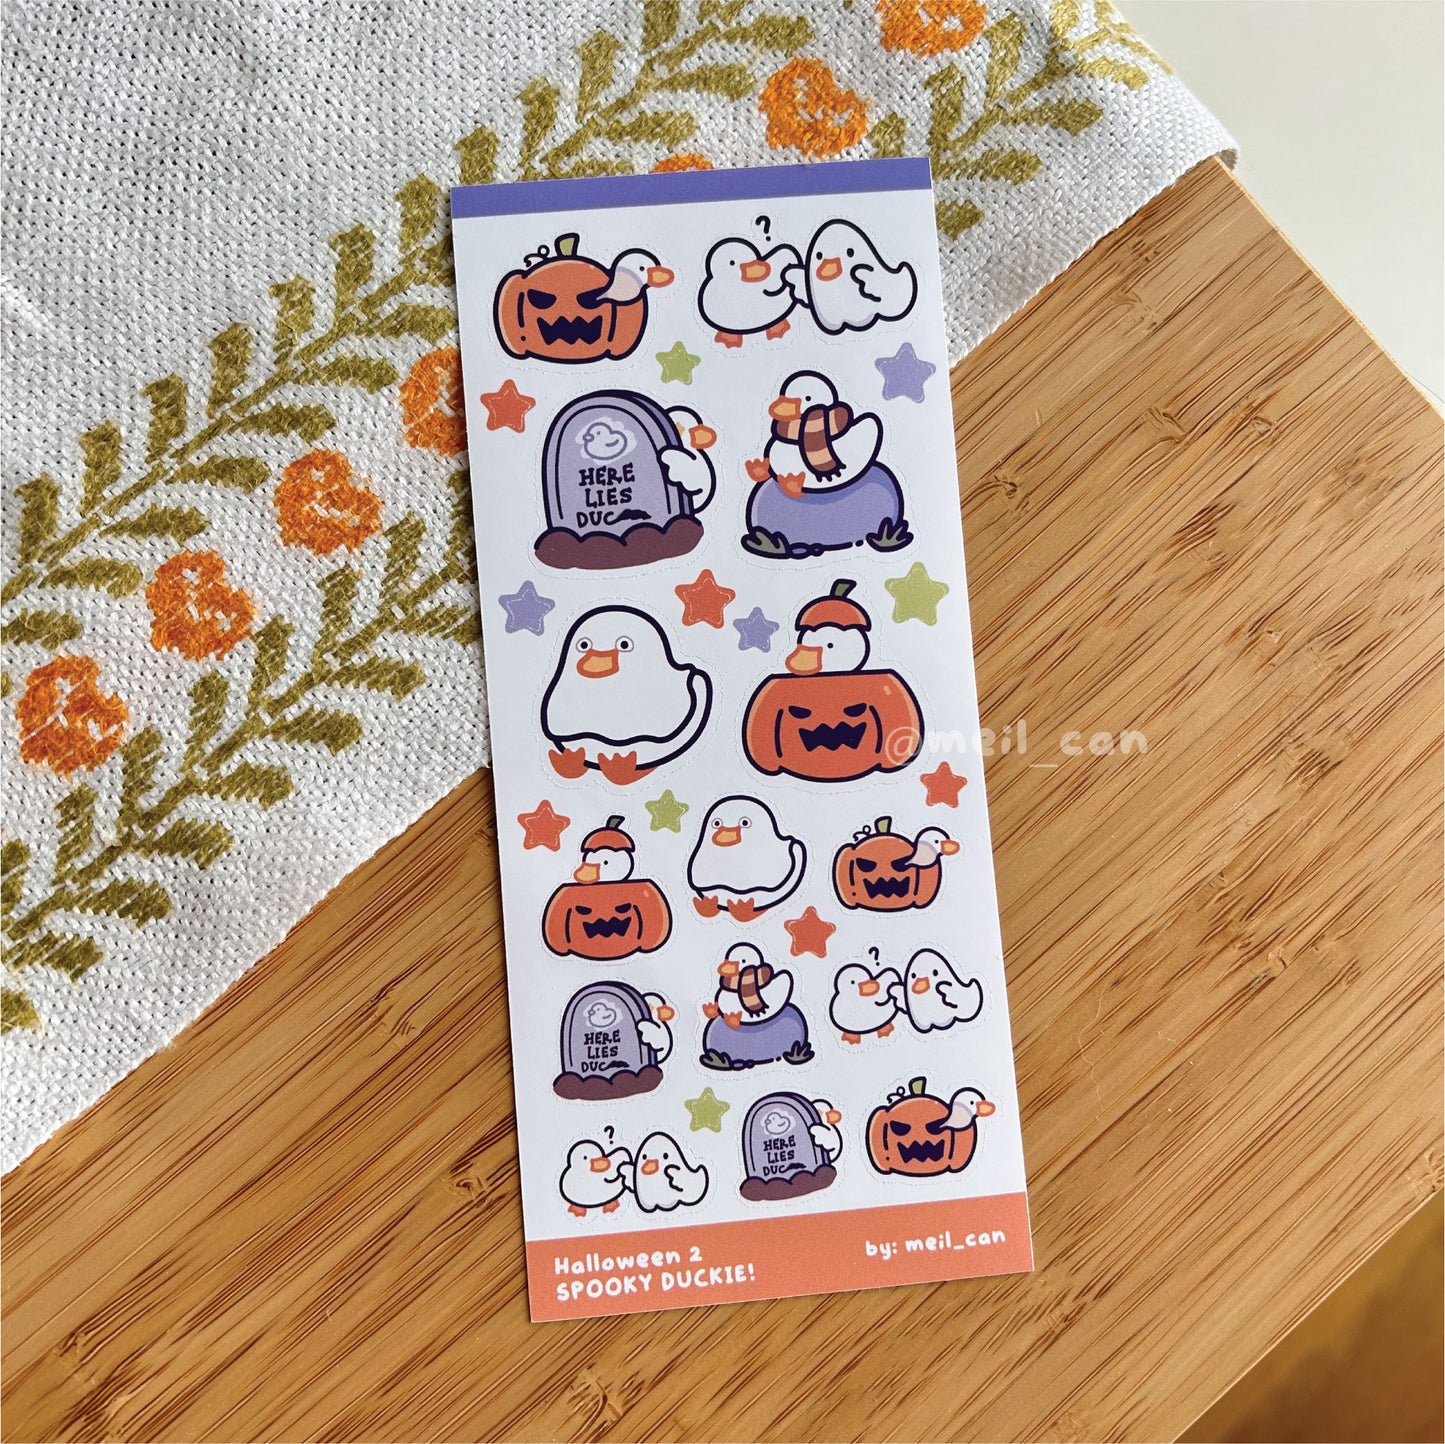 Halloween with Duckie Sticker Sheets - Duck Sticker Sheet